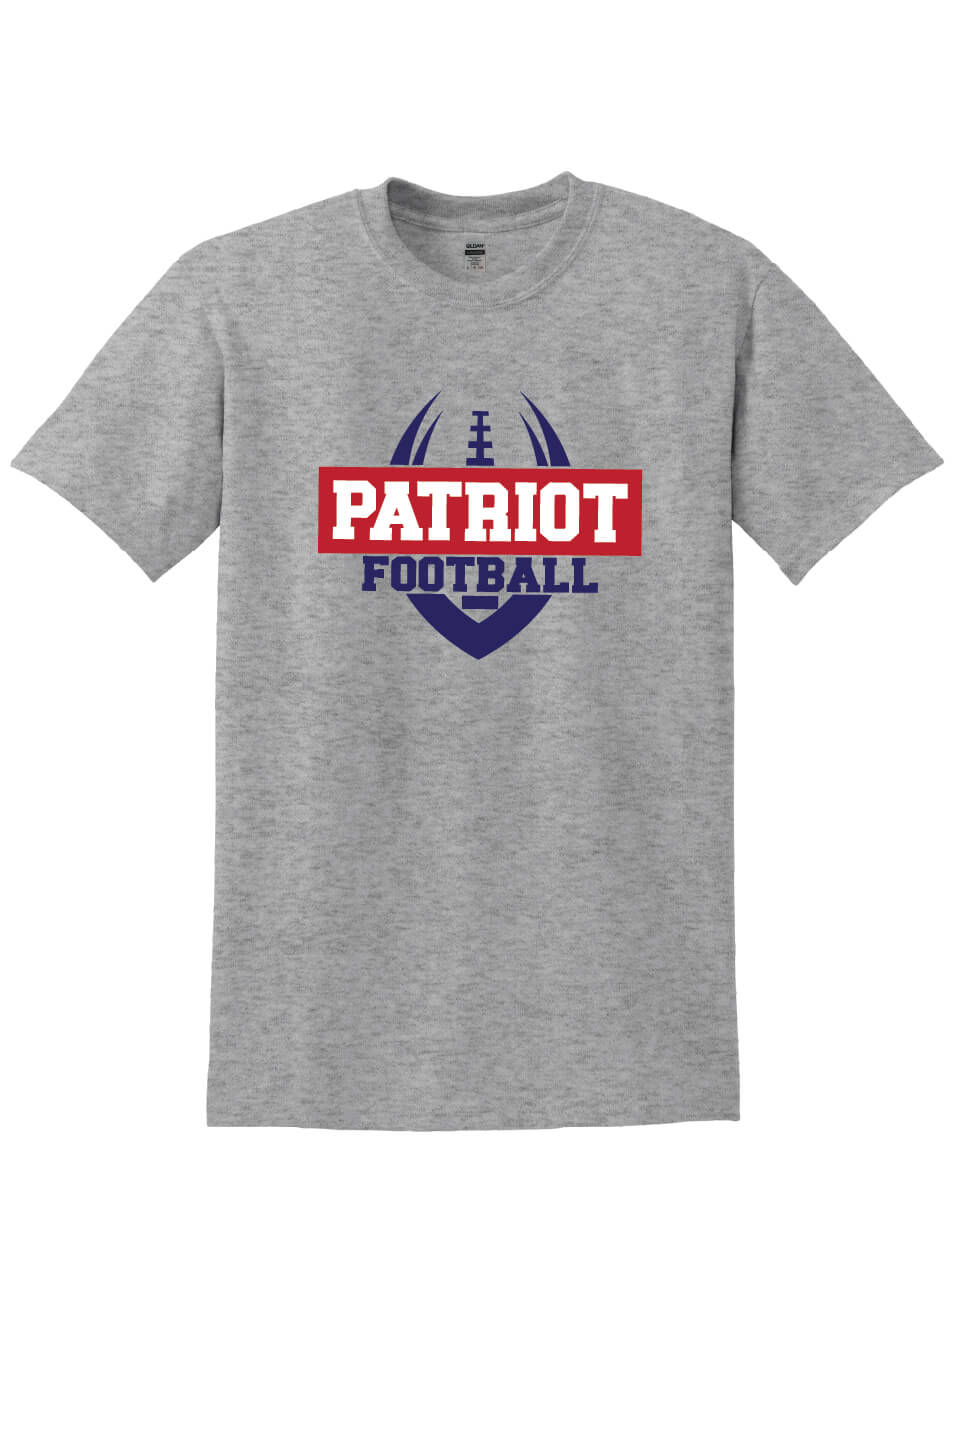 Patriot Football Short Sleeve T-shirts (Youth) gray